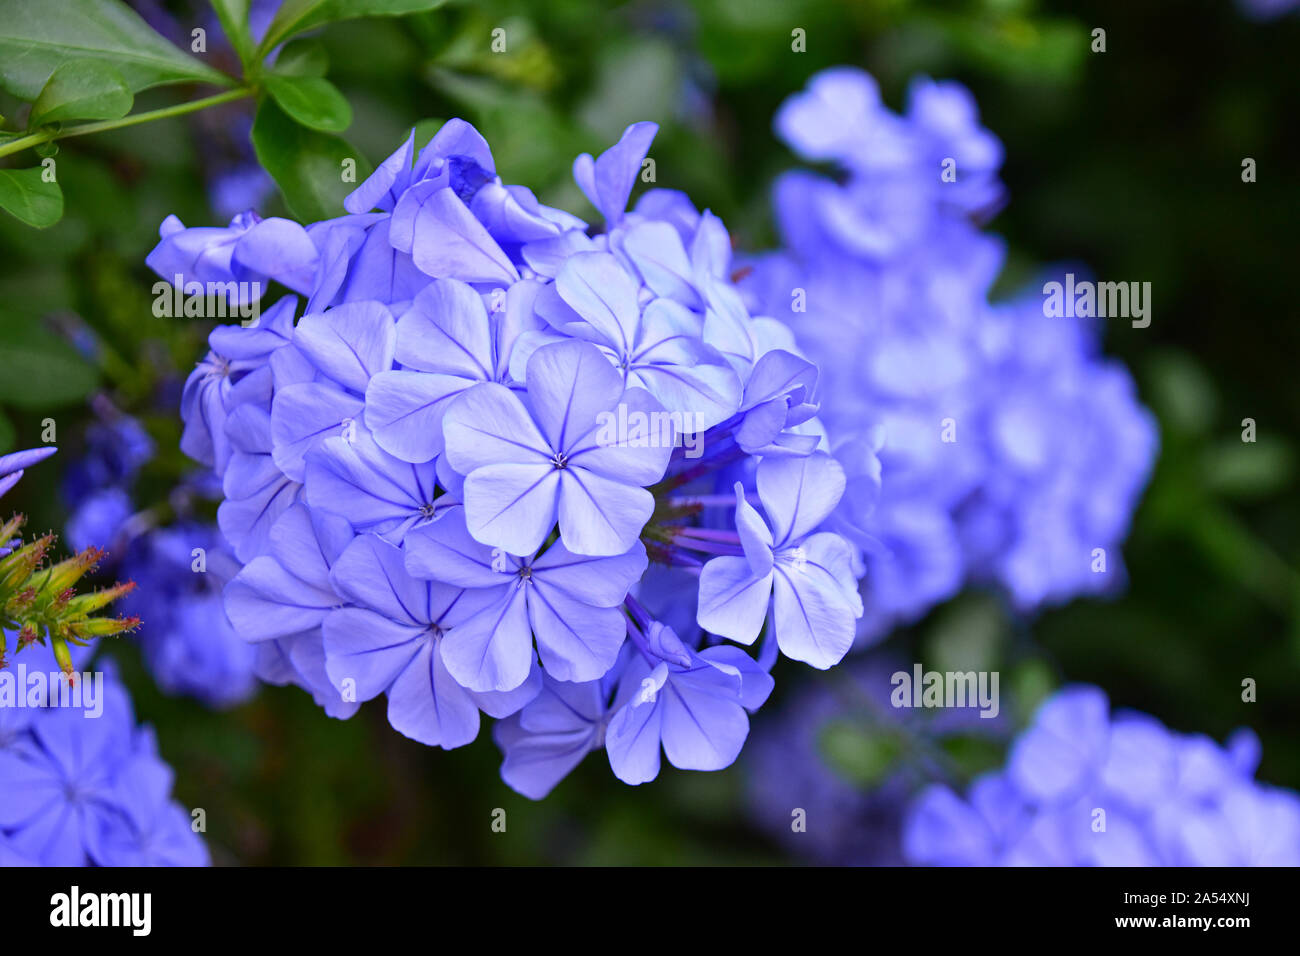 Plumbago plant in flower, blue petals Stock Photo